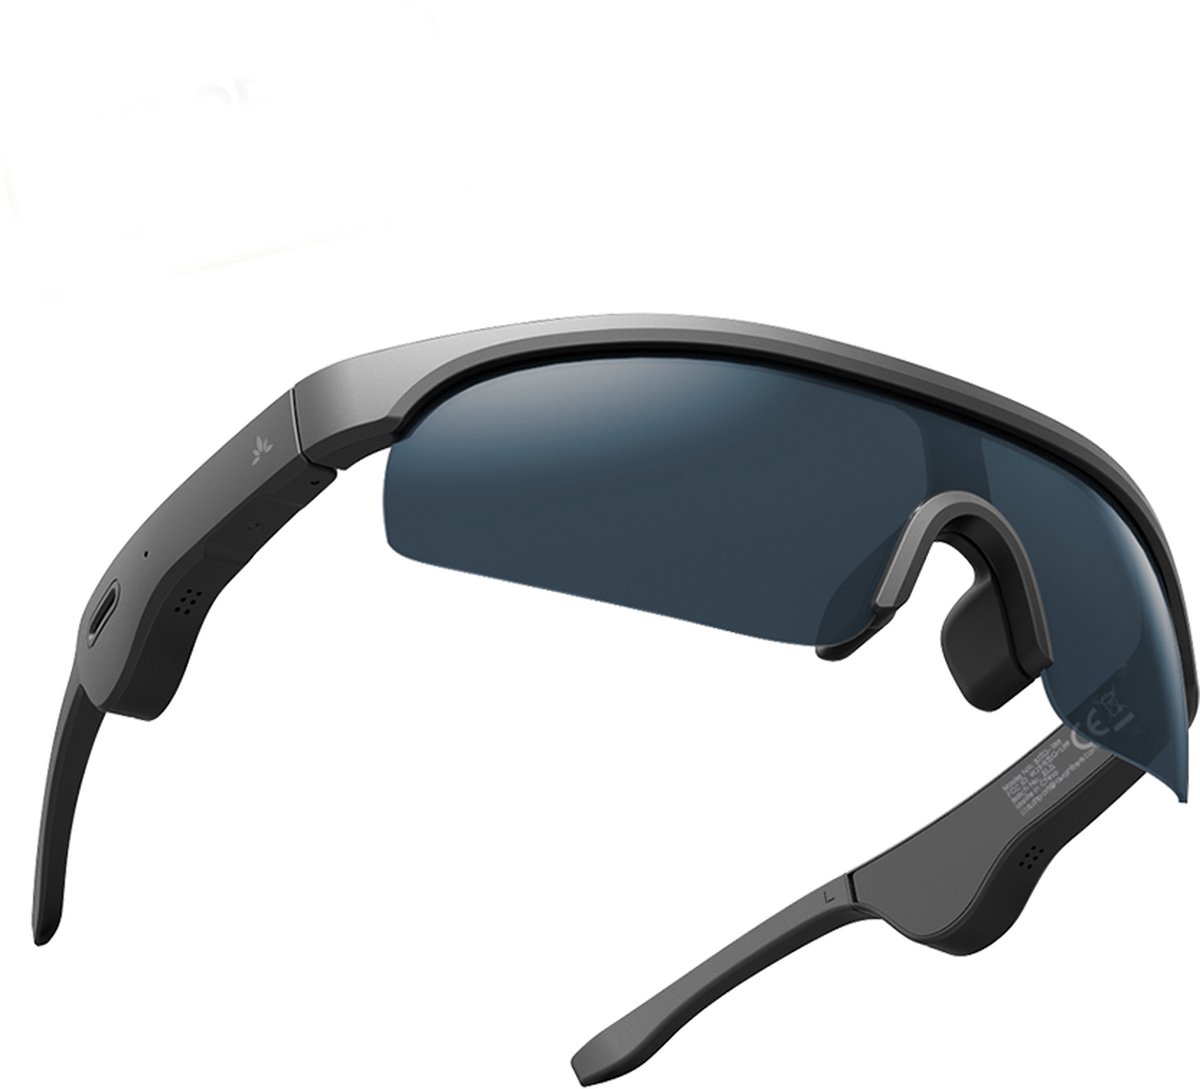 Avantree - Optic Sun / SG188 Bluetooth Audio Sunglasses with Open Ear Headphones, Polarized Lenses, UV400 Protection, aptX-HD Audio